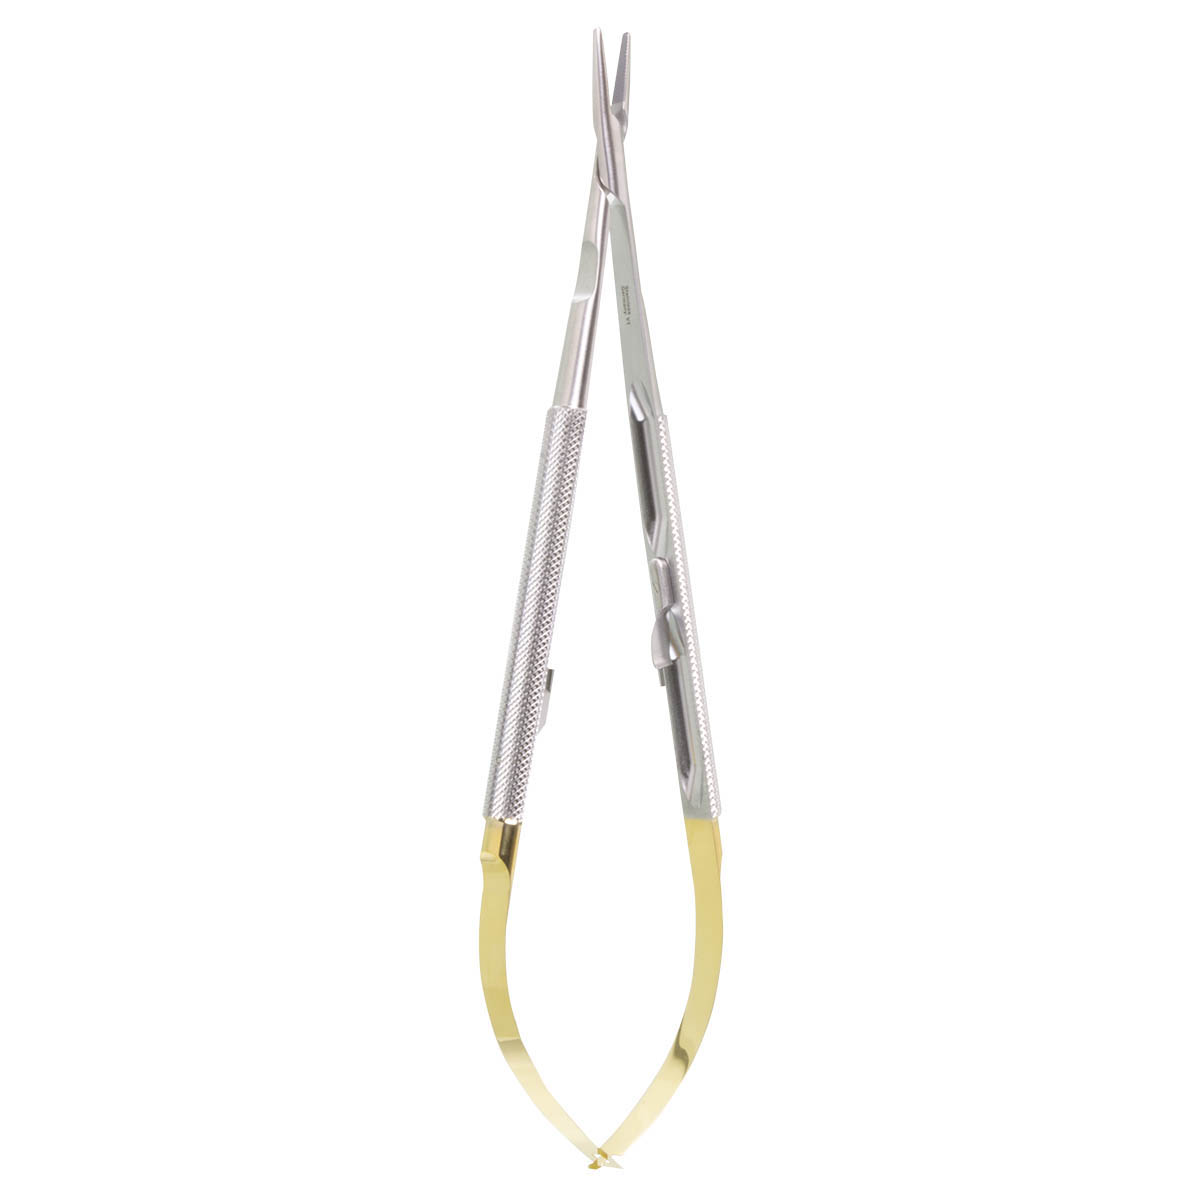 Luxuro Medium Beading Needles (Length 2.5”, Diameter 0.36”) Set of